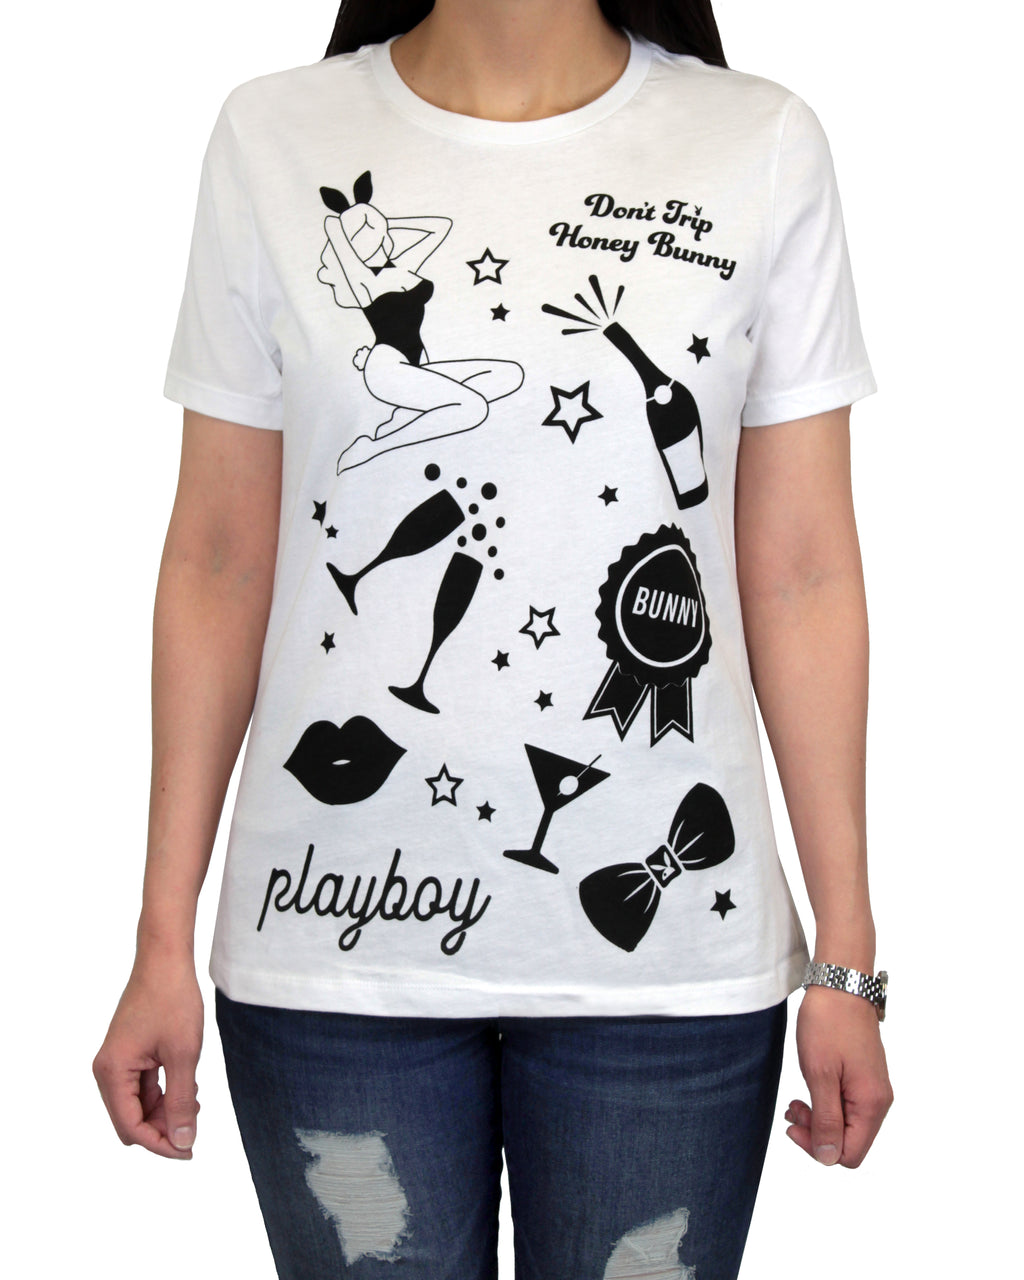 Playboy Collage Women’s T-Shirt